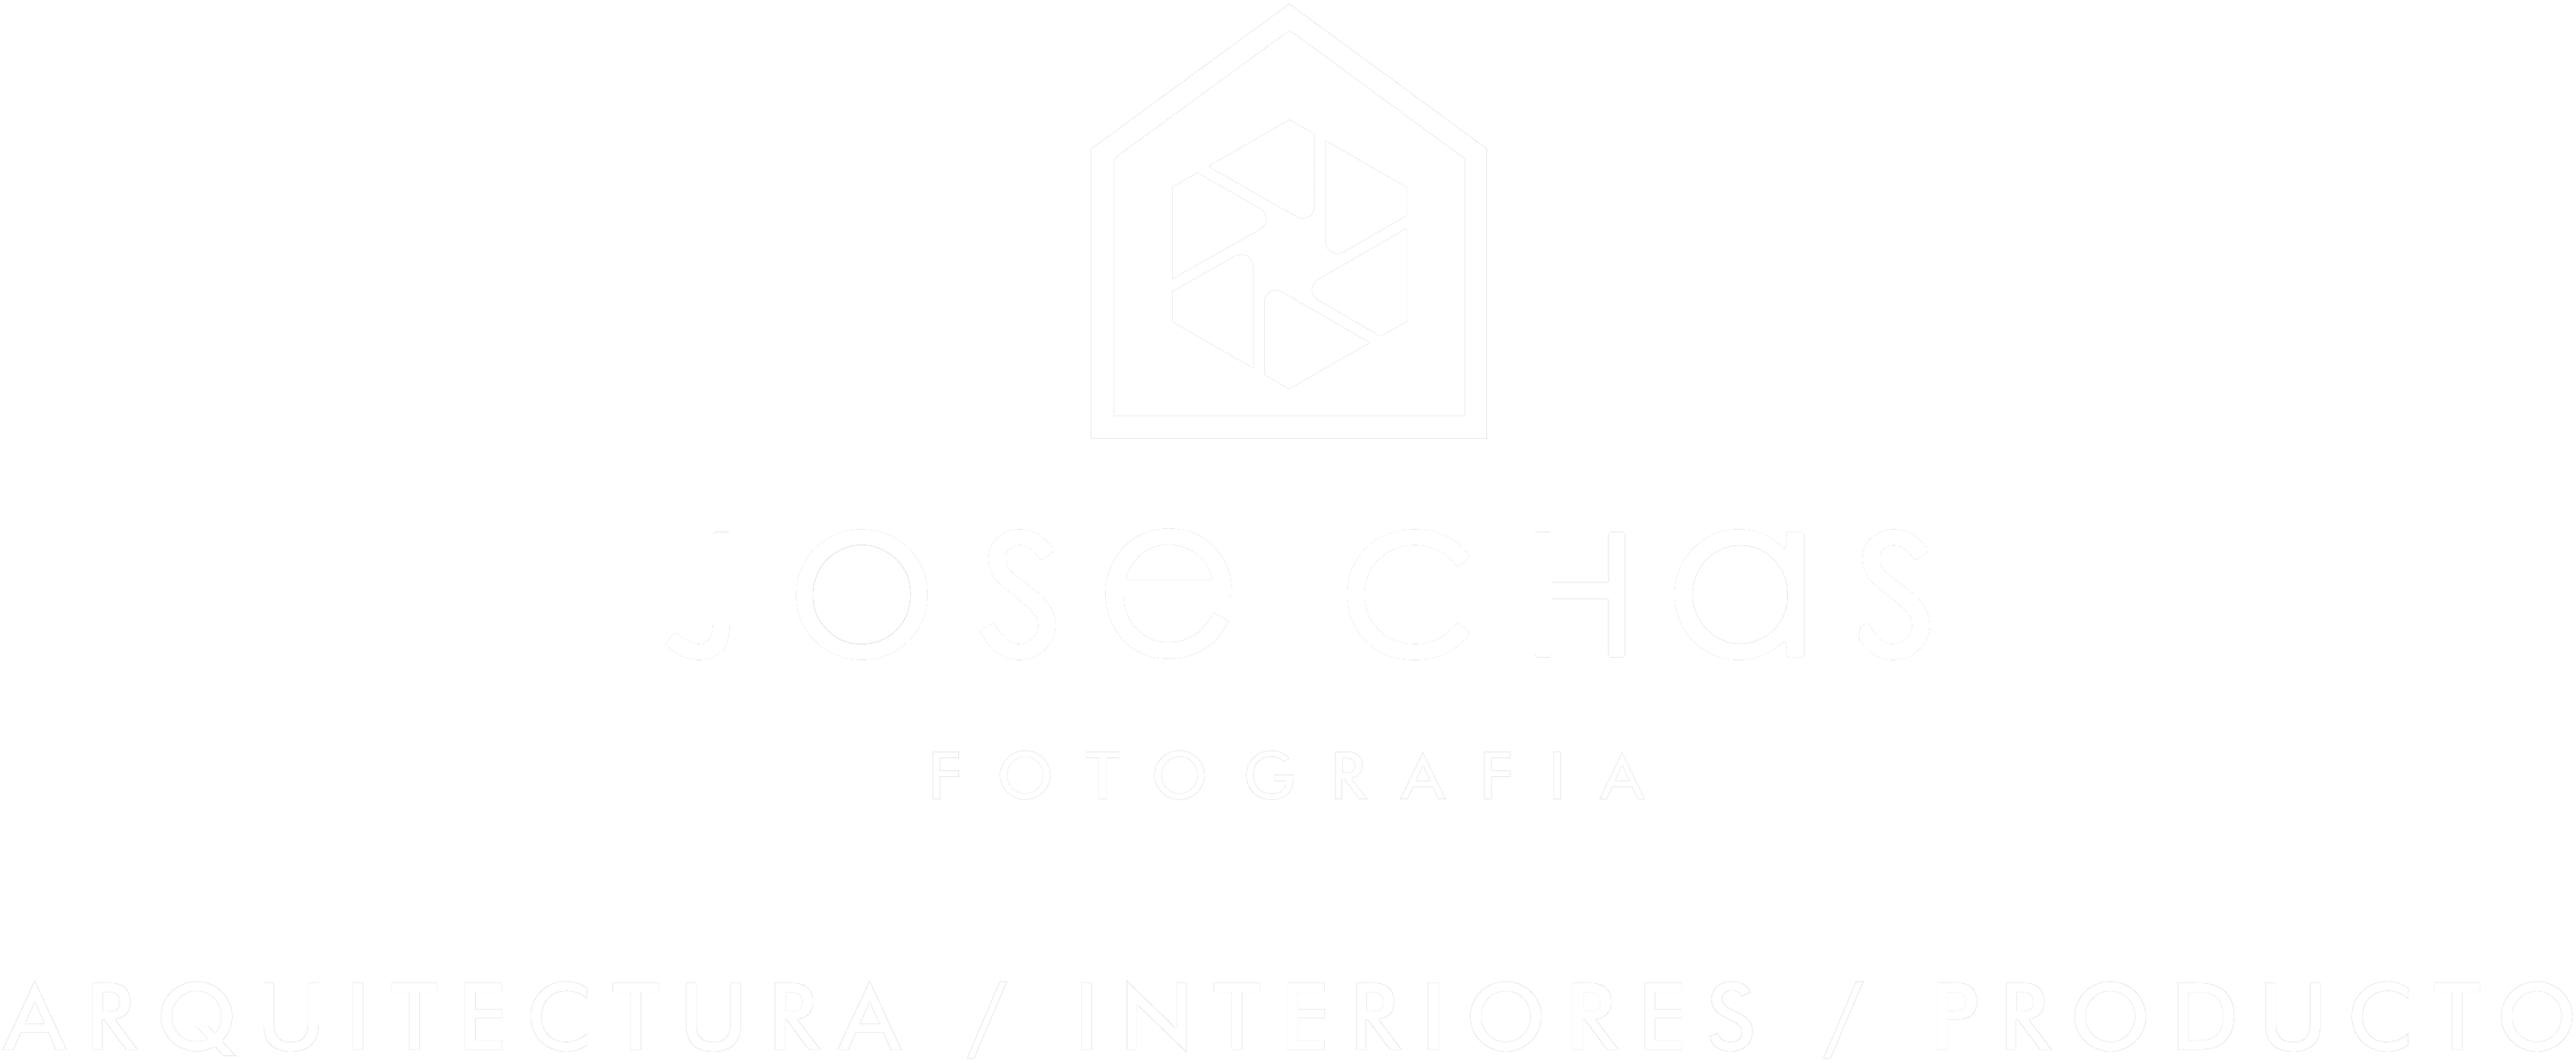 Jose Chas - Photography